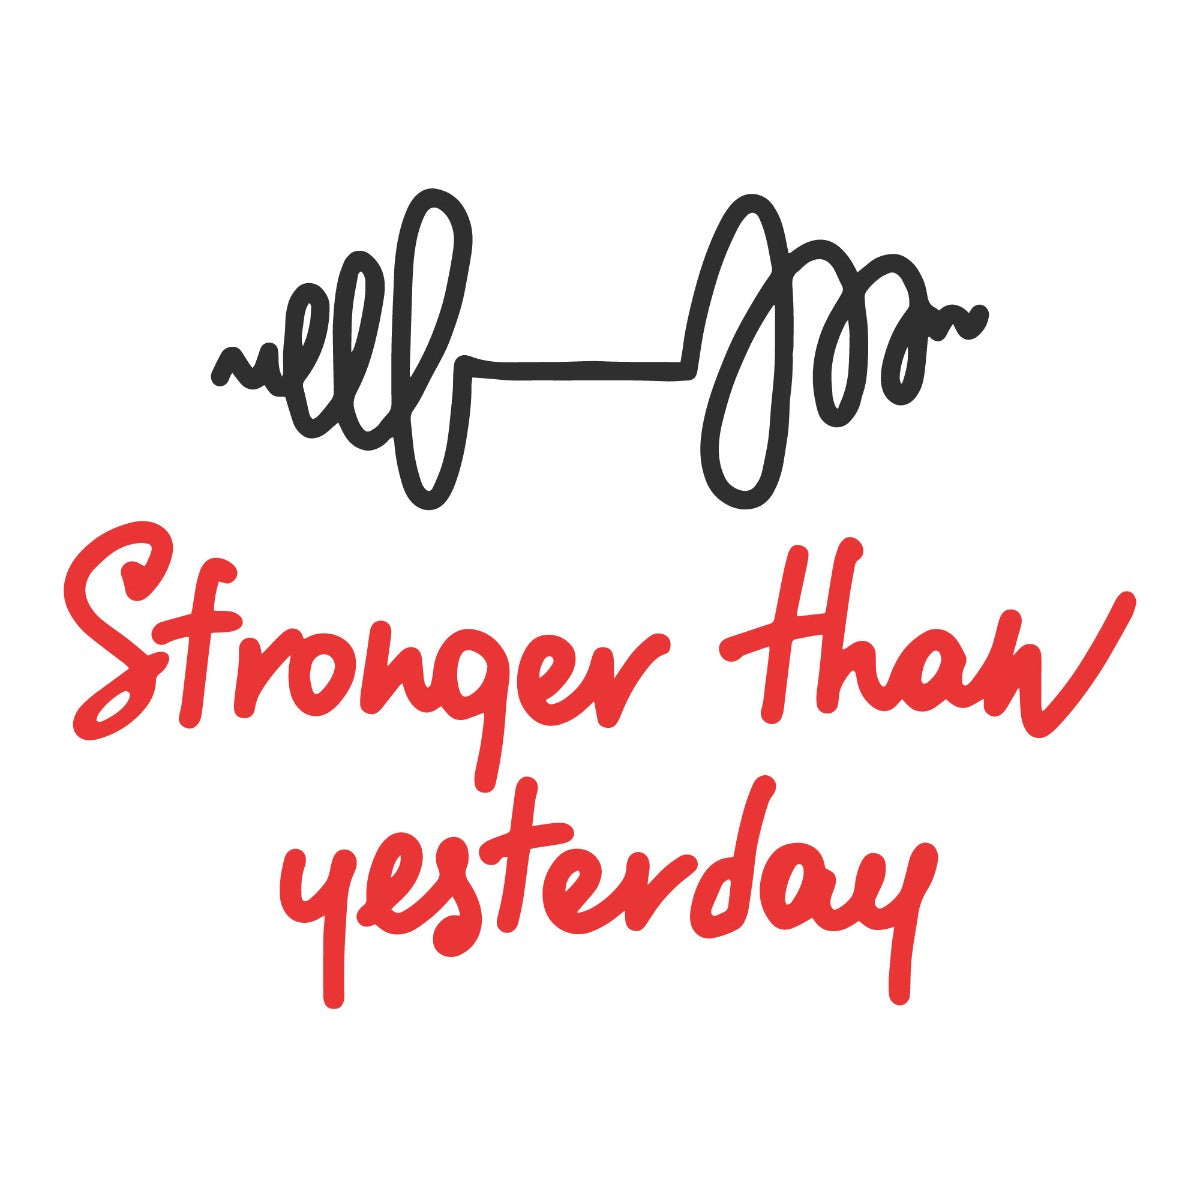 Gym Wall Sticker - Stronger Than Yesterday Handwritten Quote